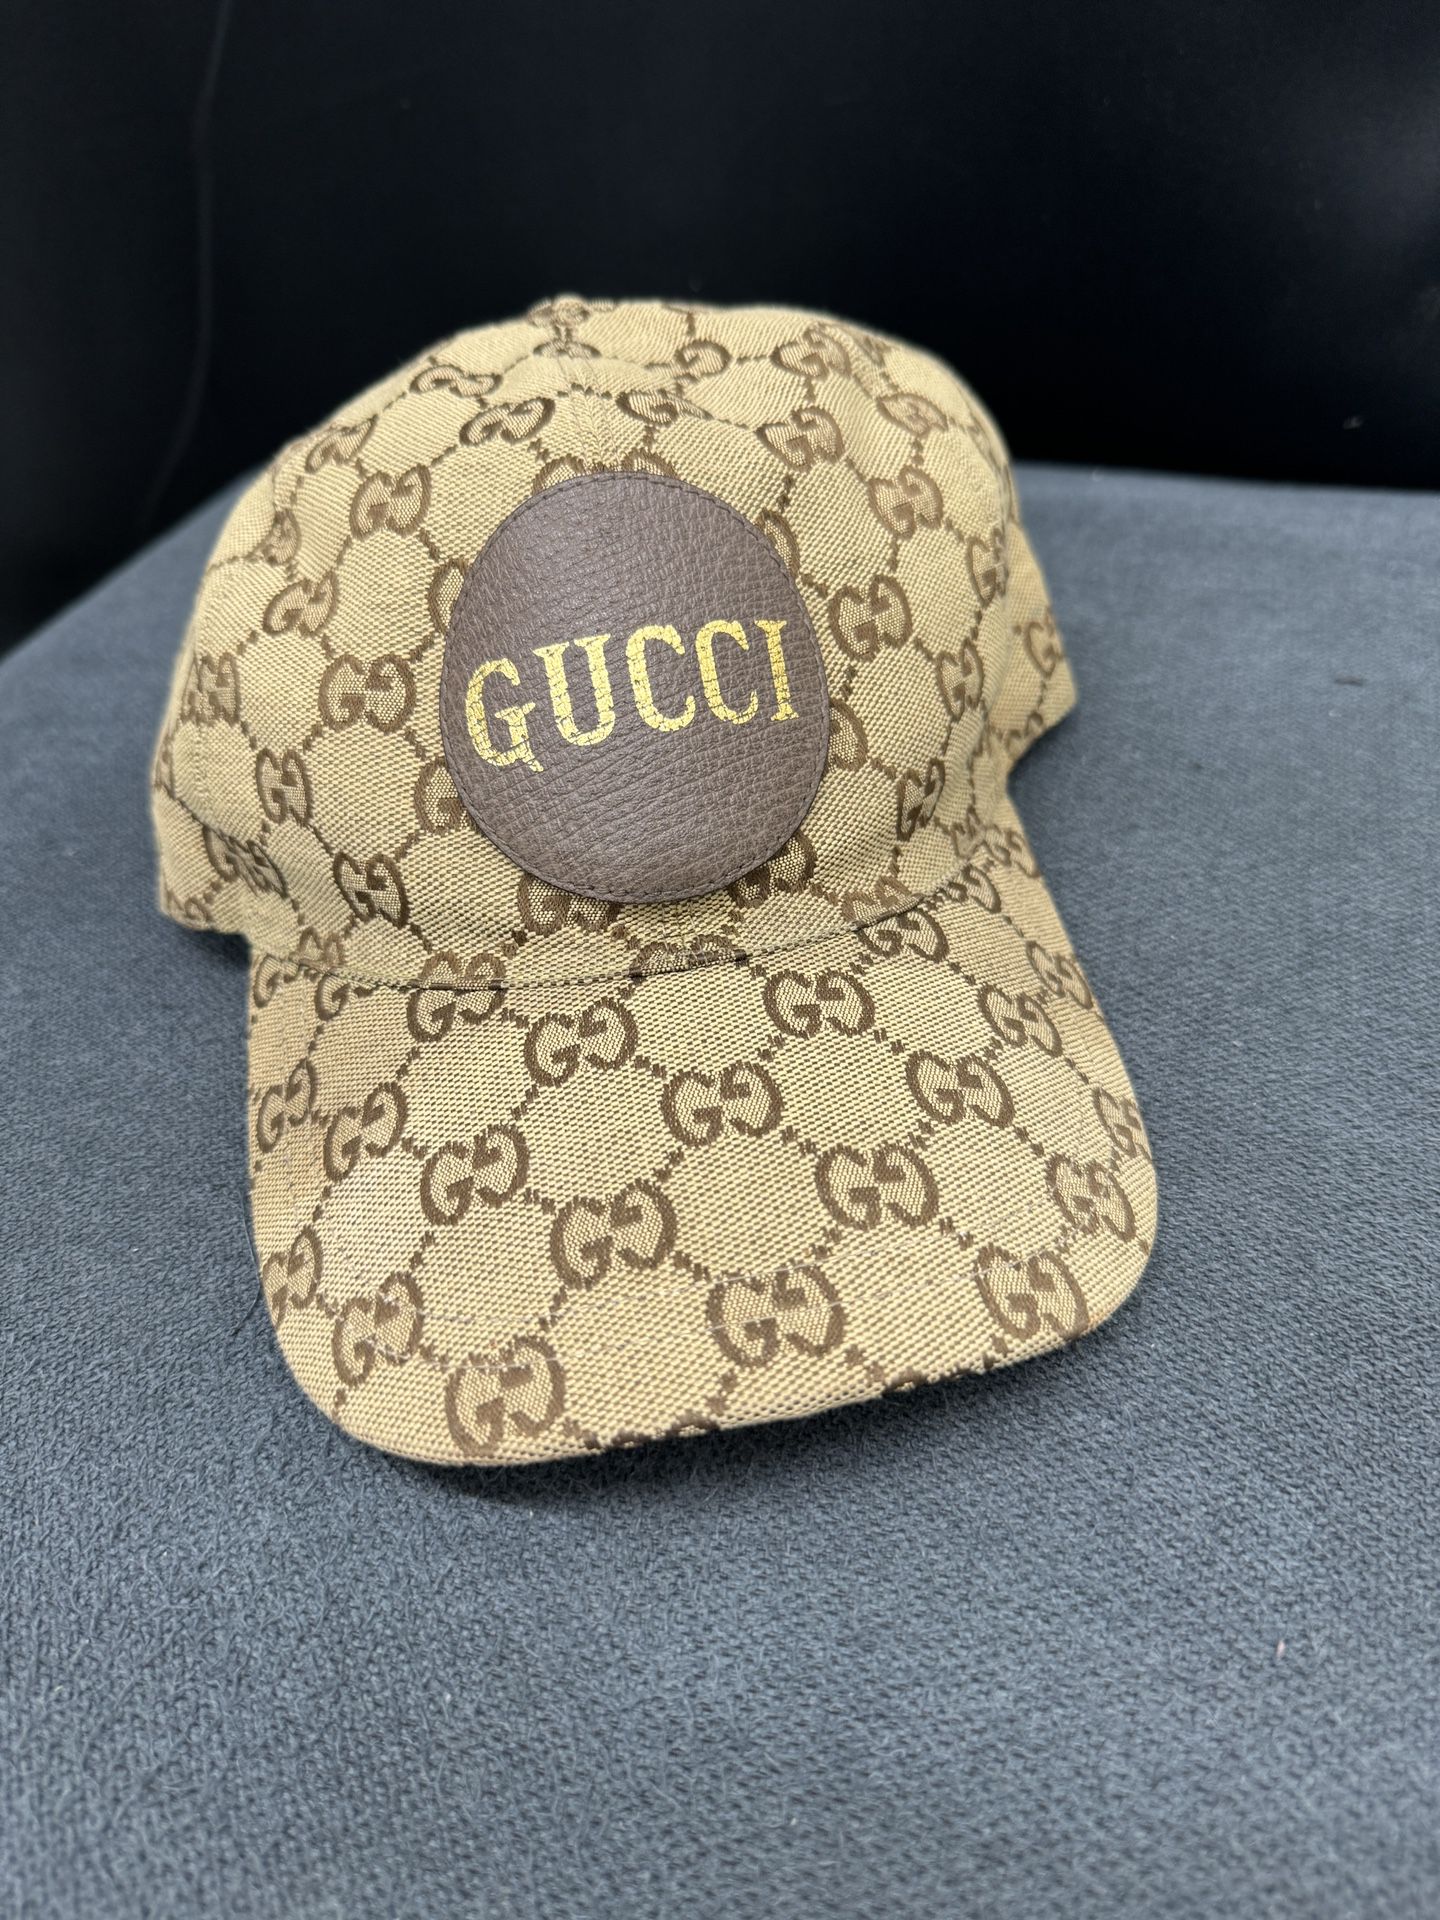 Authentic Gucci Hat